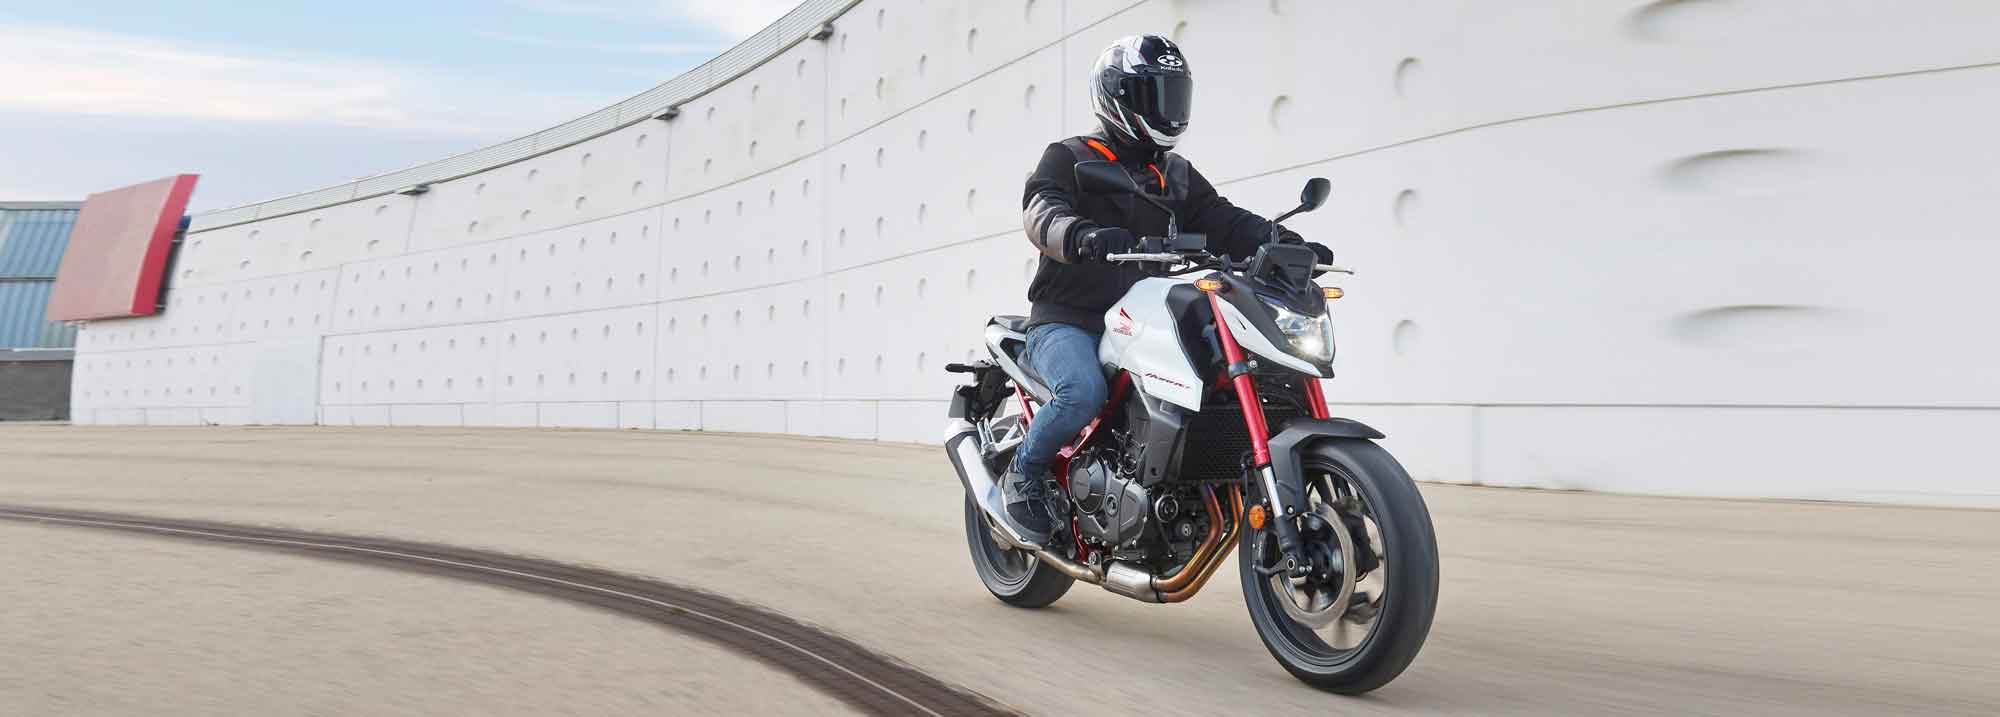 Honda CB750 hornet goes on sale in South Africa video-banner